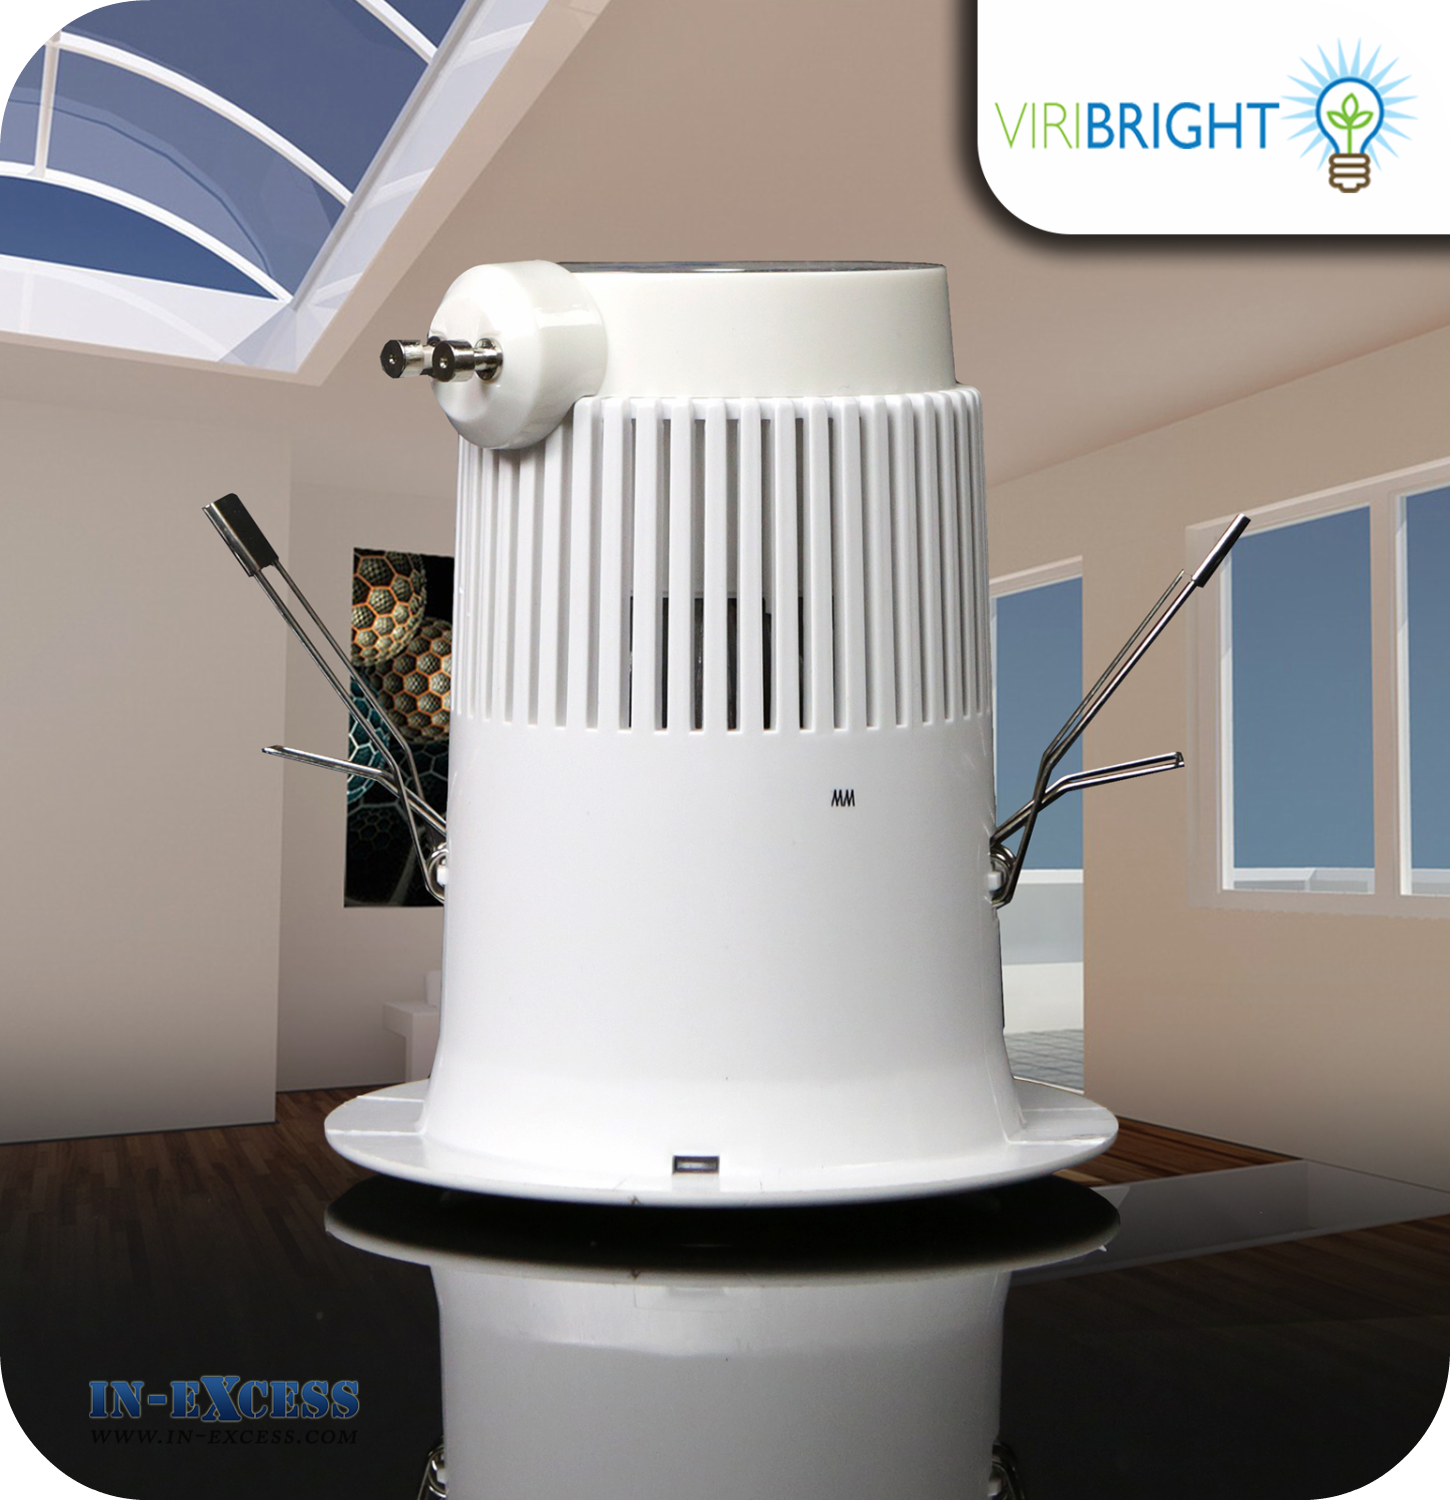 ViriBright LED Downlight 550lm GU10 - 8W